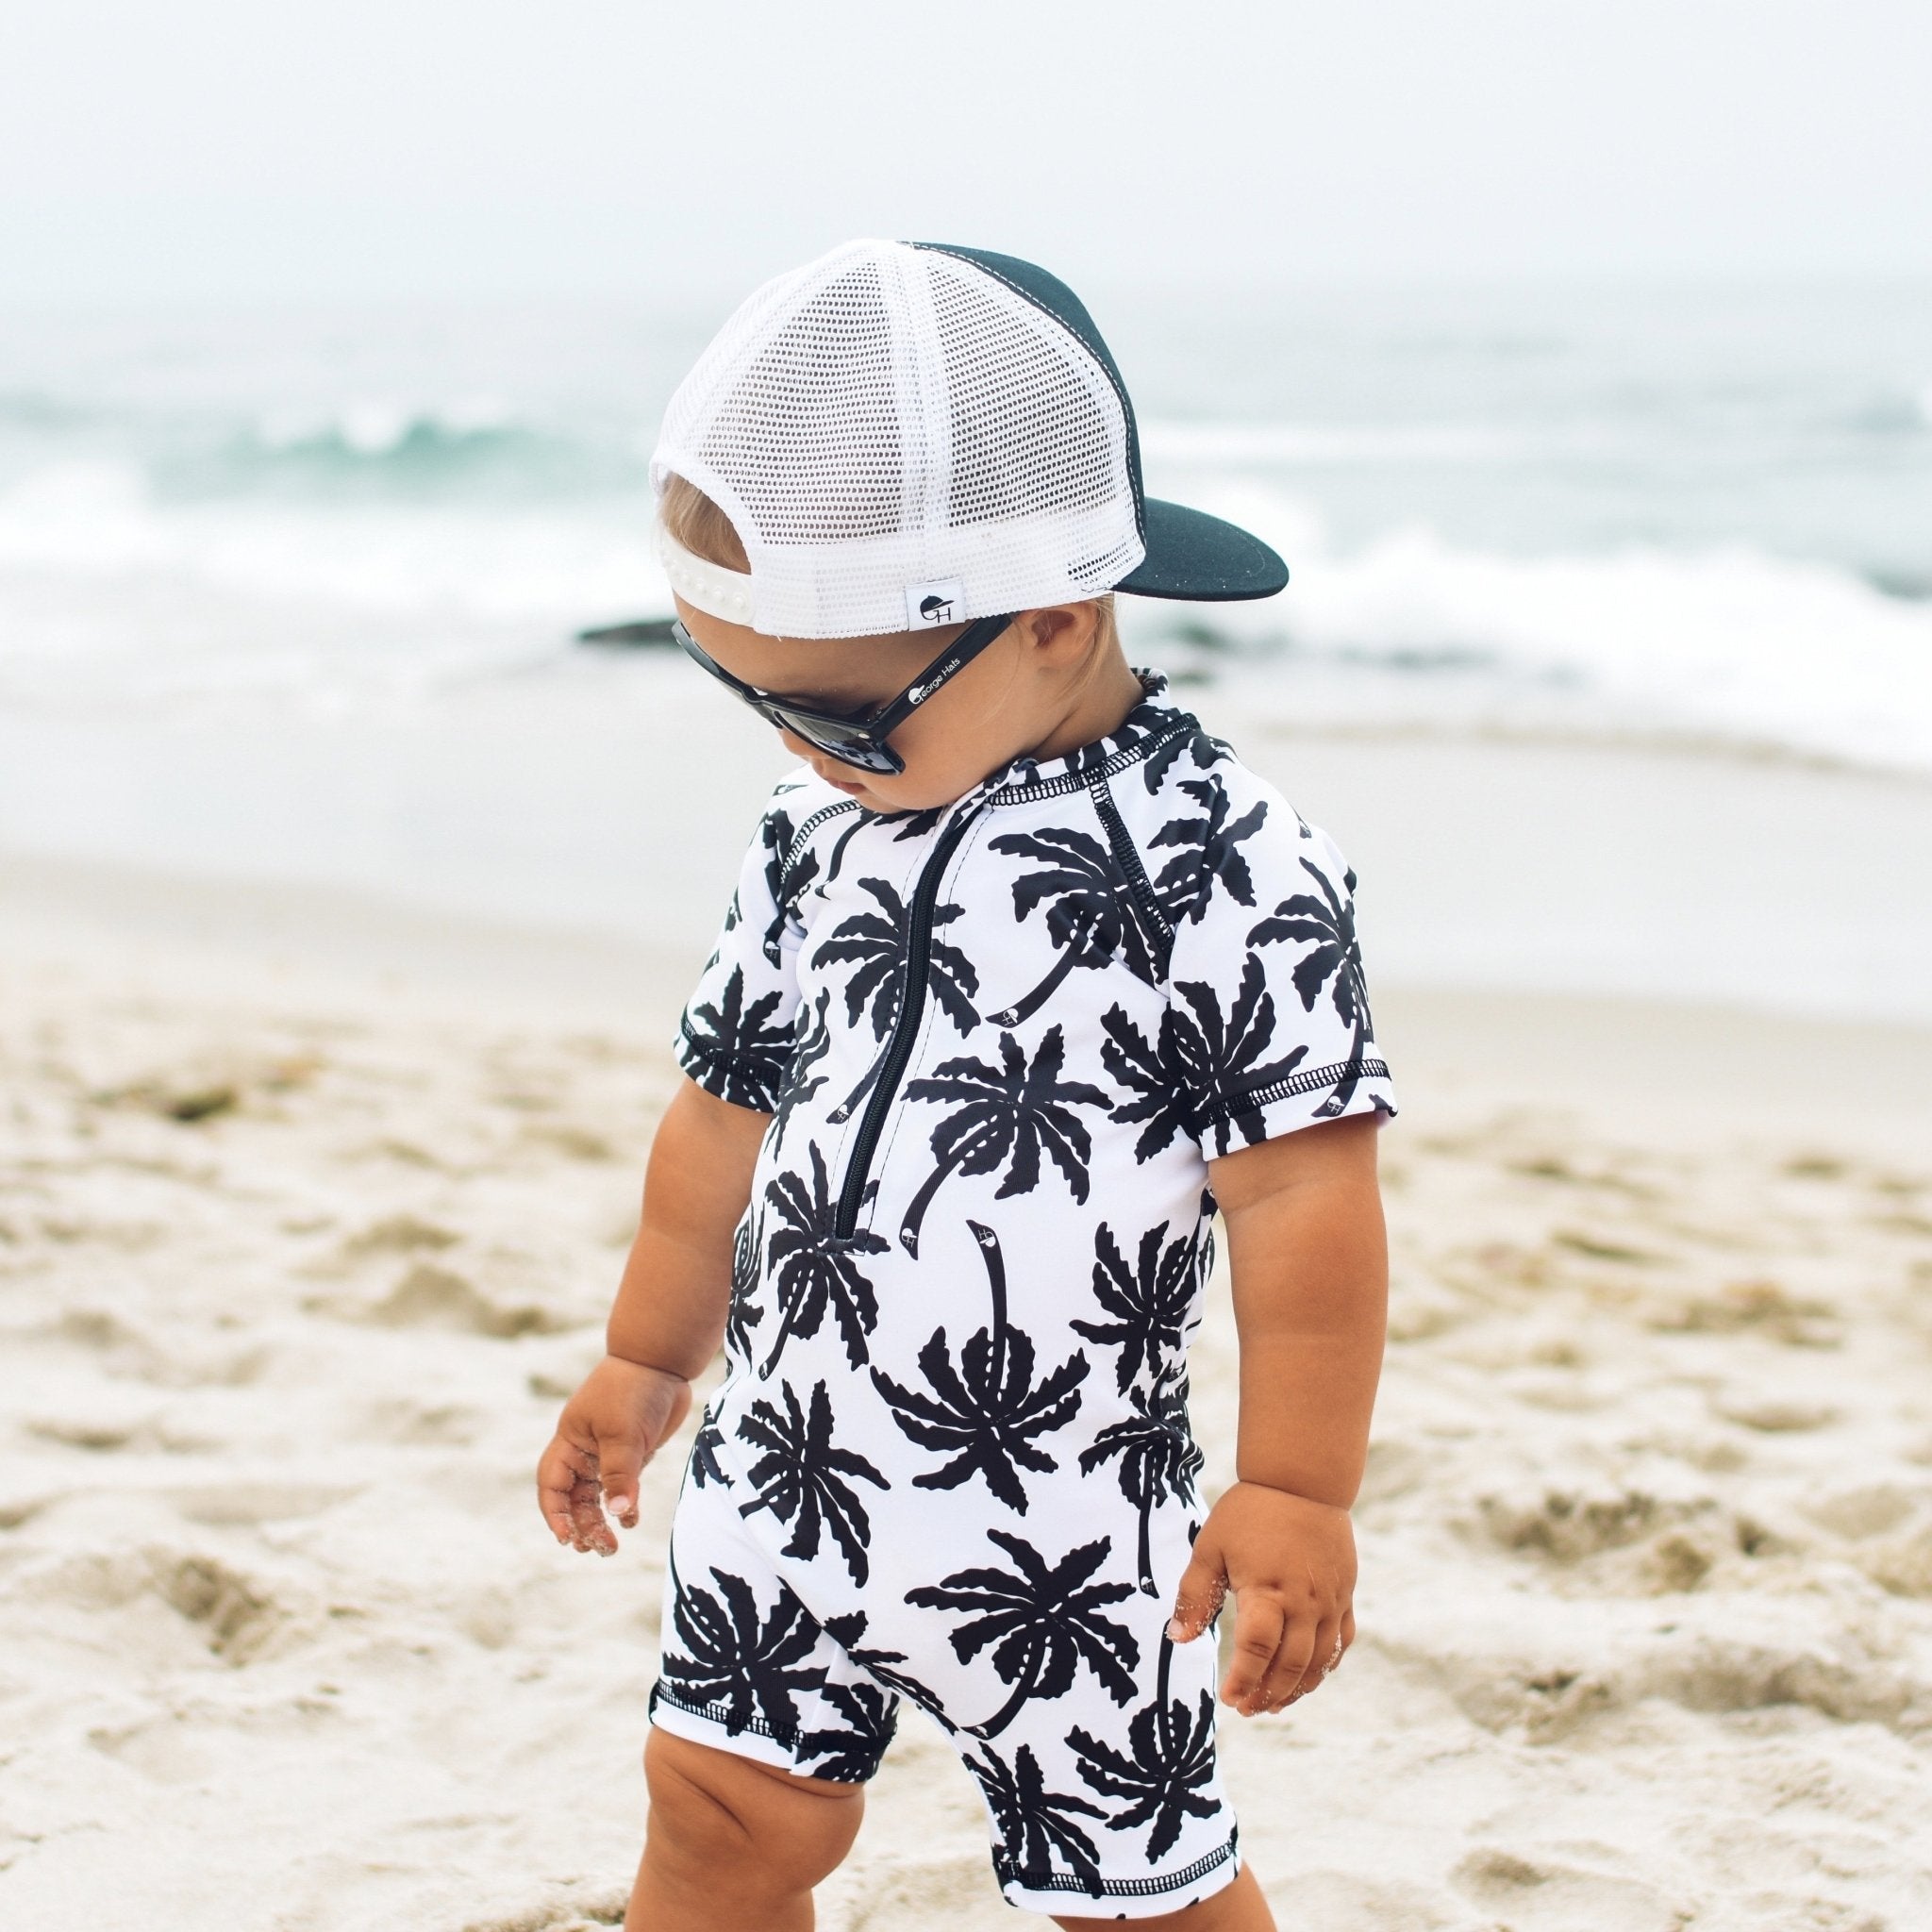 Palm Sun and Swim Suit - George Hats